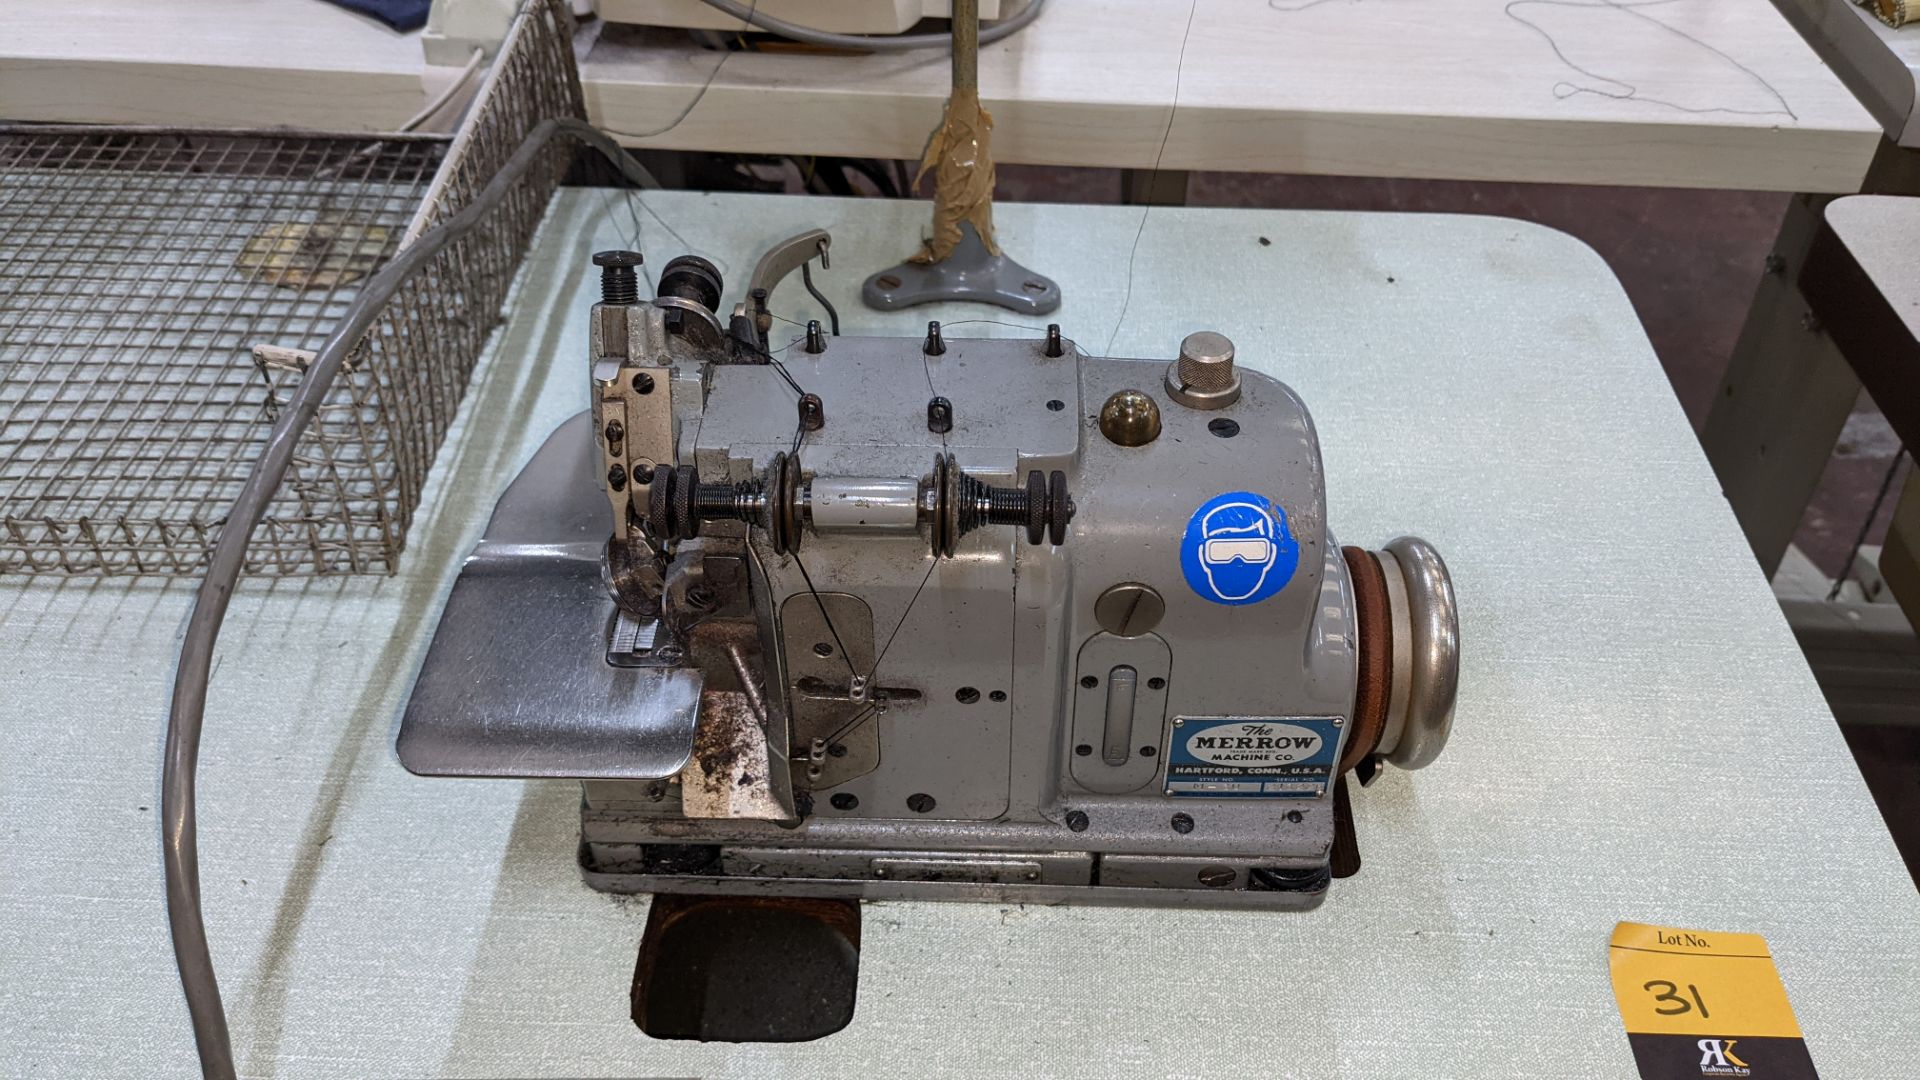 Merrow sewing machine, model M-30 - Image 5 of 14